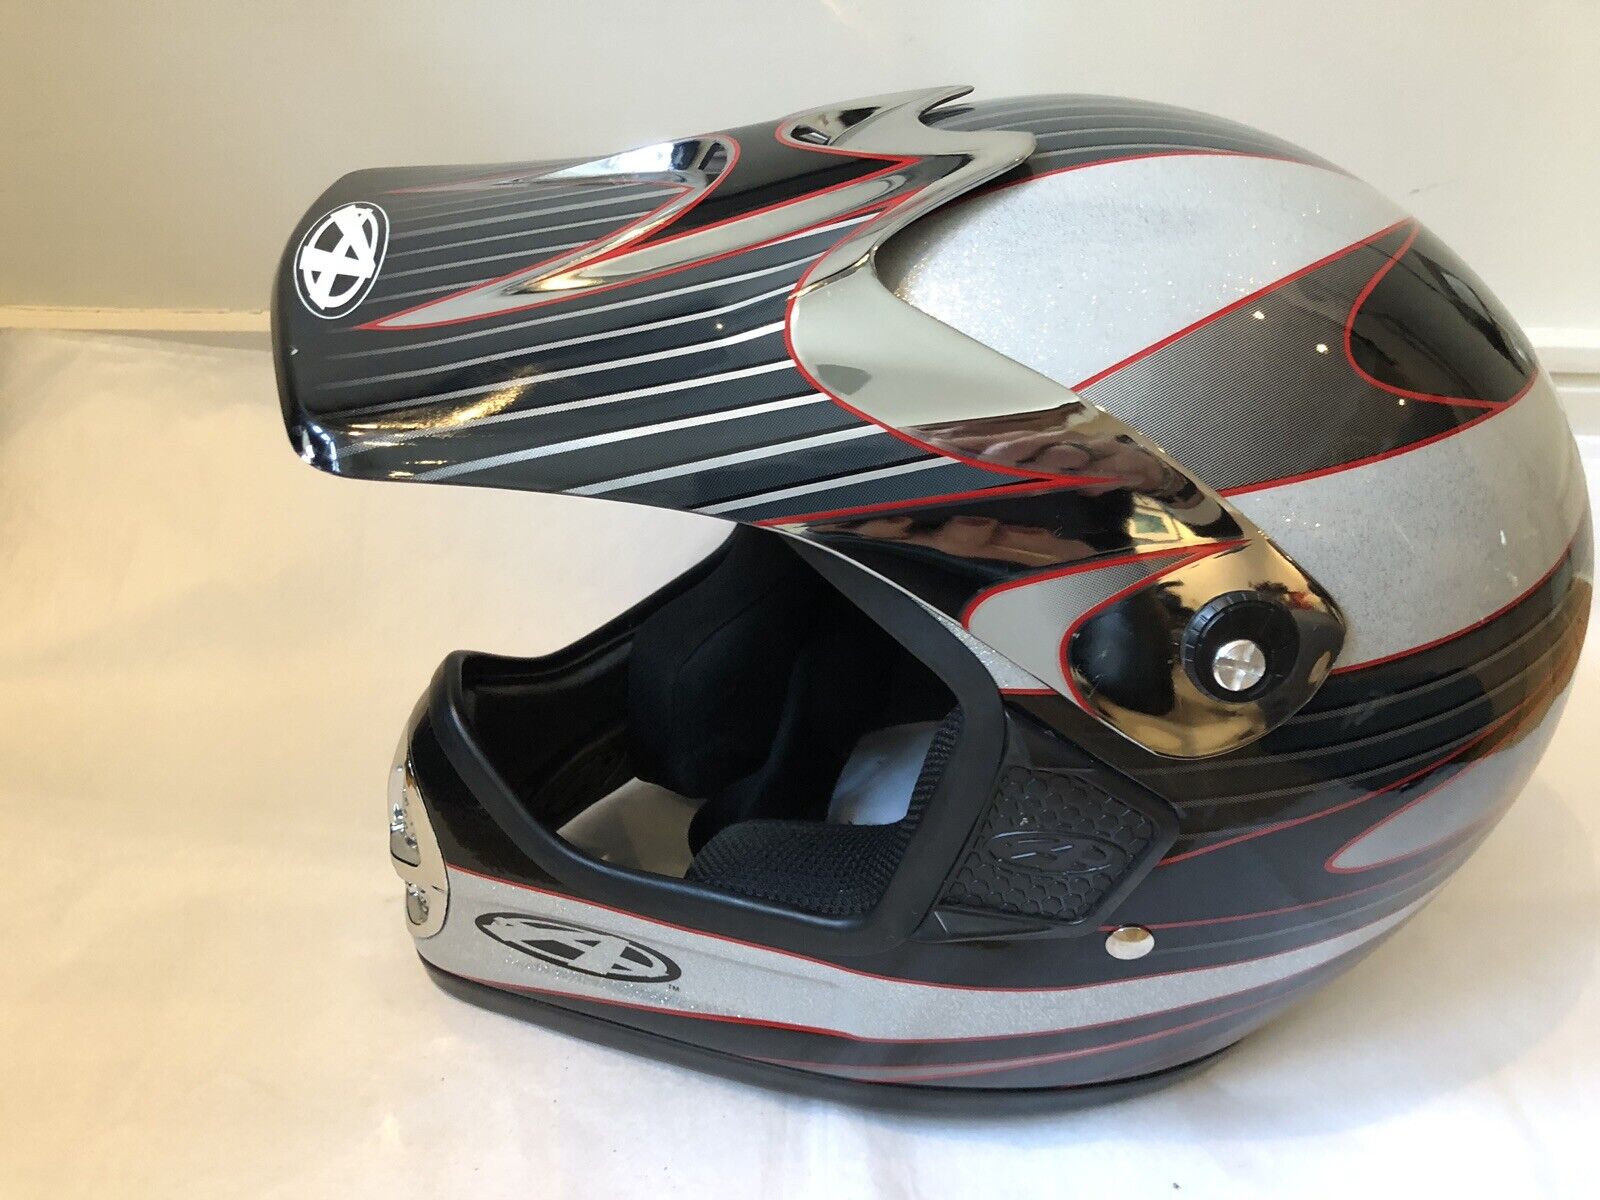 Answer Motocross M7 Helmet Touring Adventure Silver Black Red with Bag Standardowy zwykły sklep